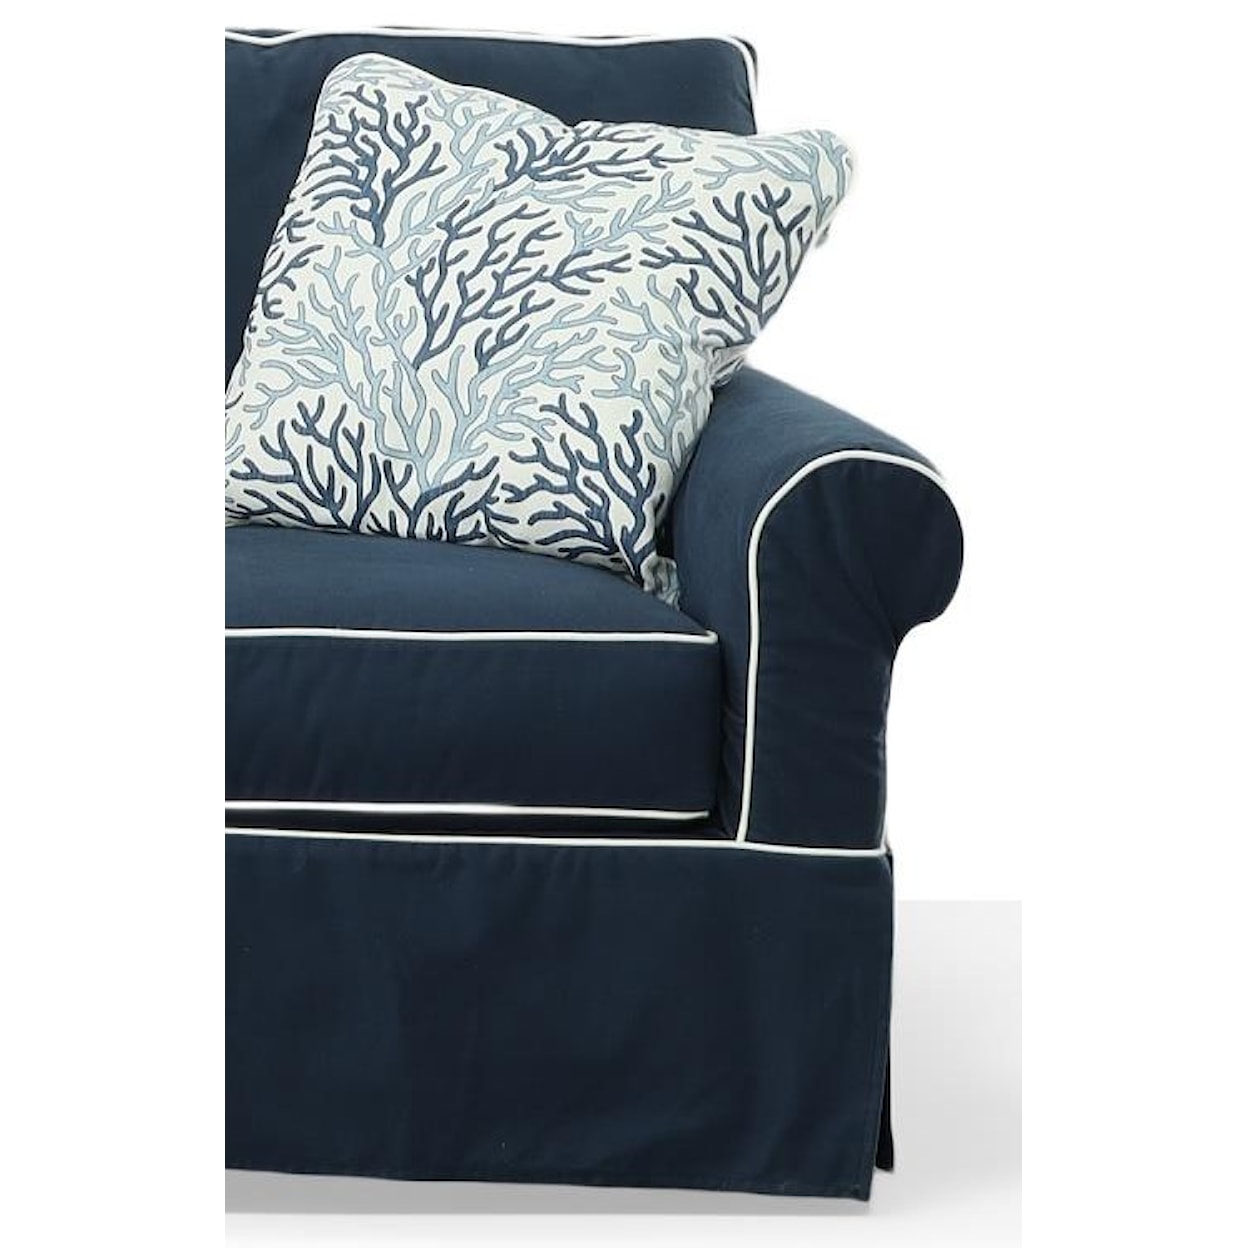 Rowe Nantucket 3 Seat Slipcover Sofa